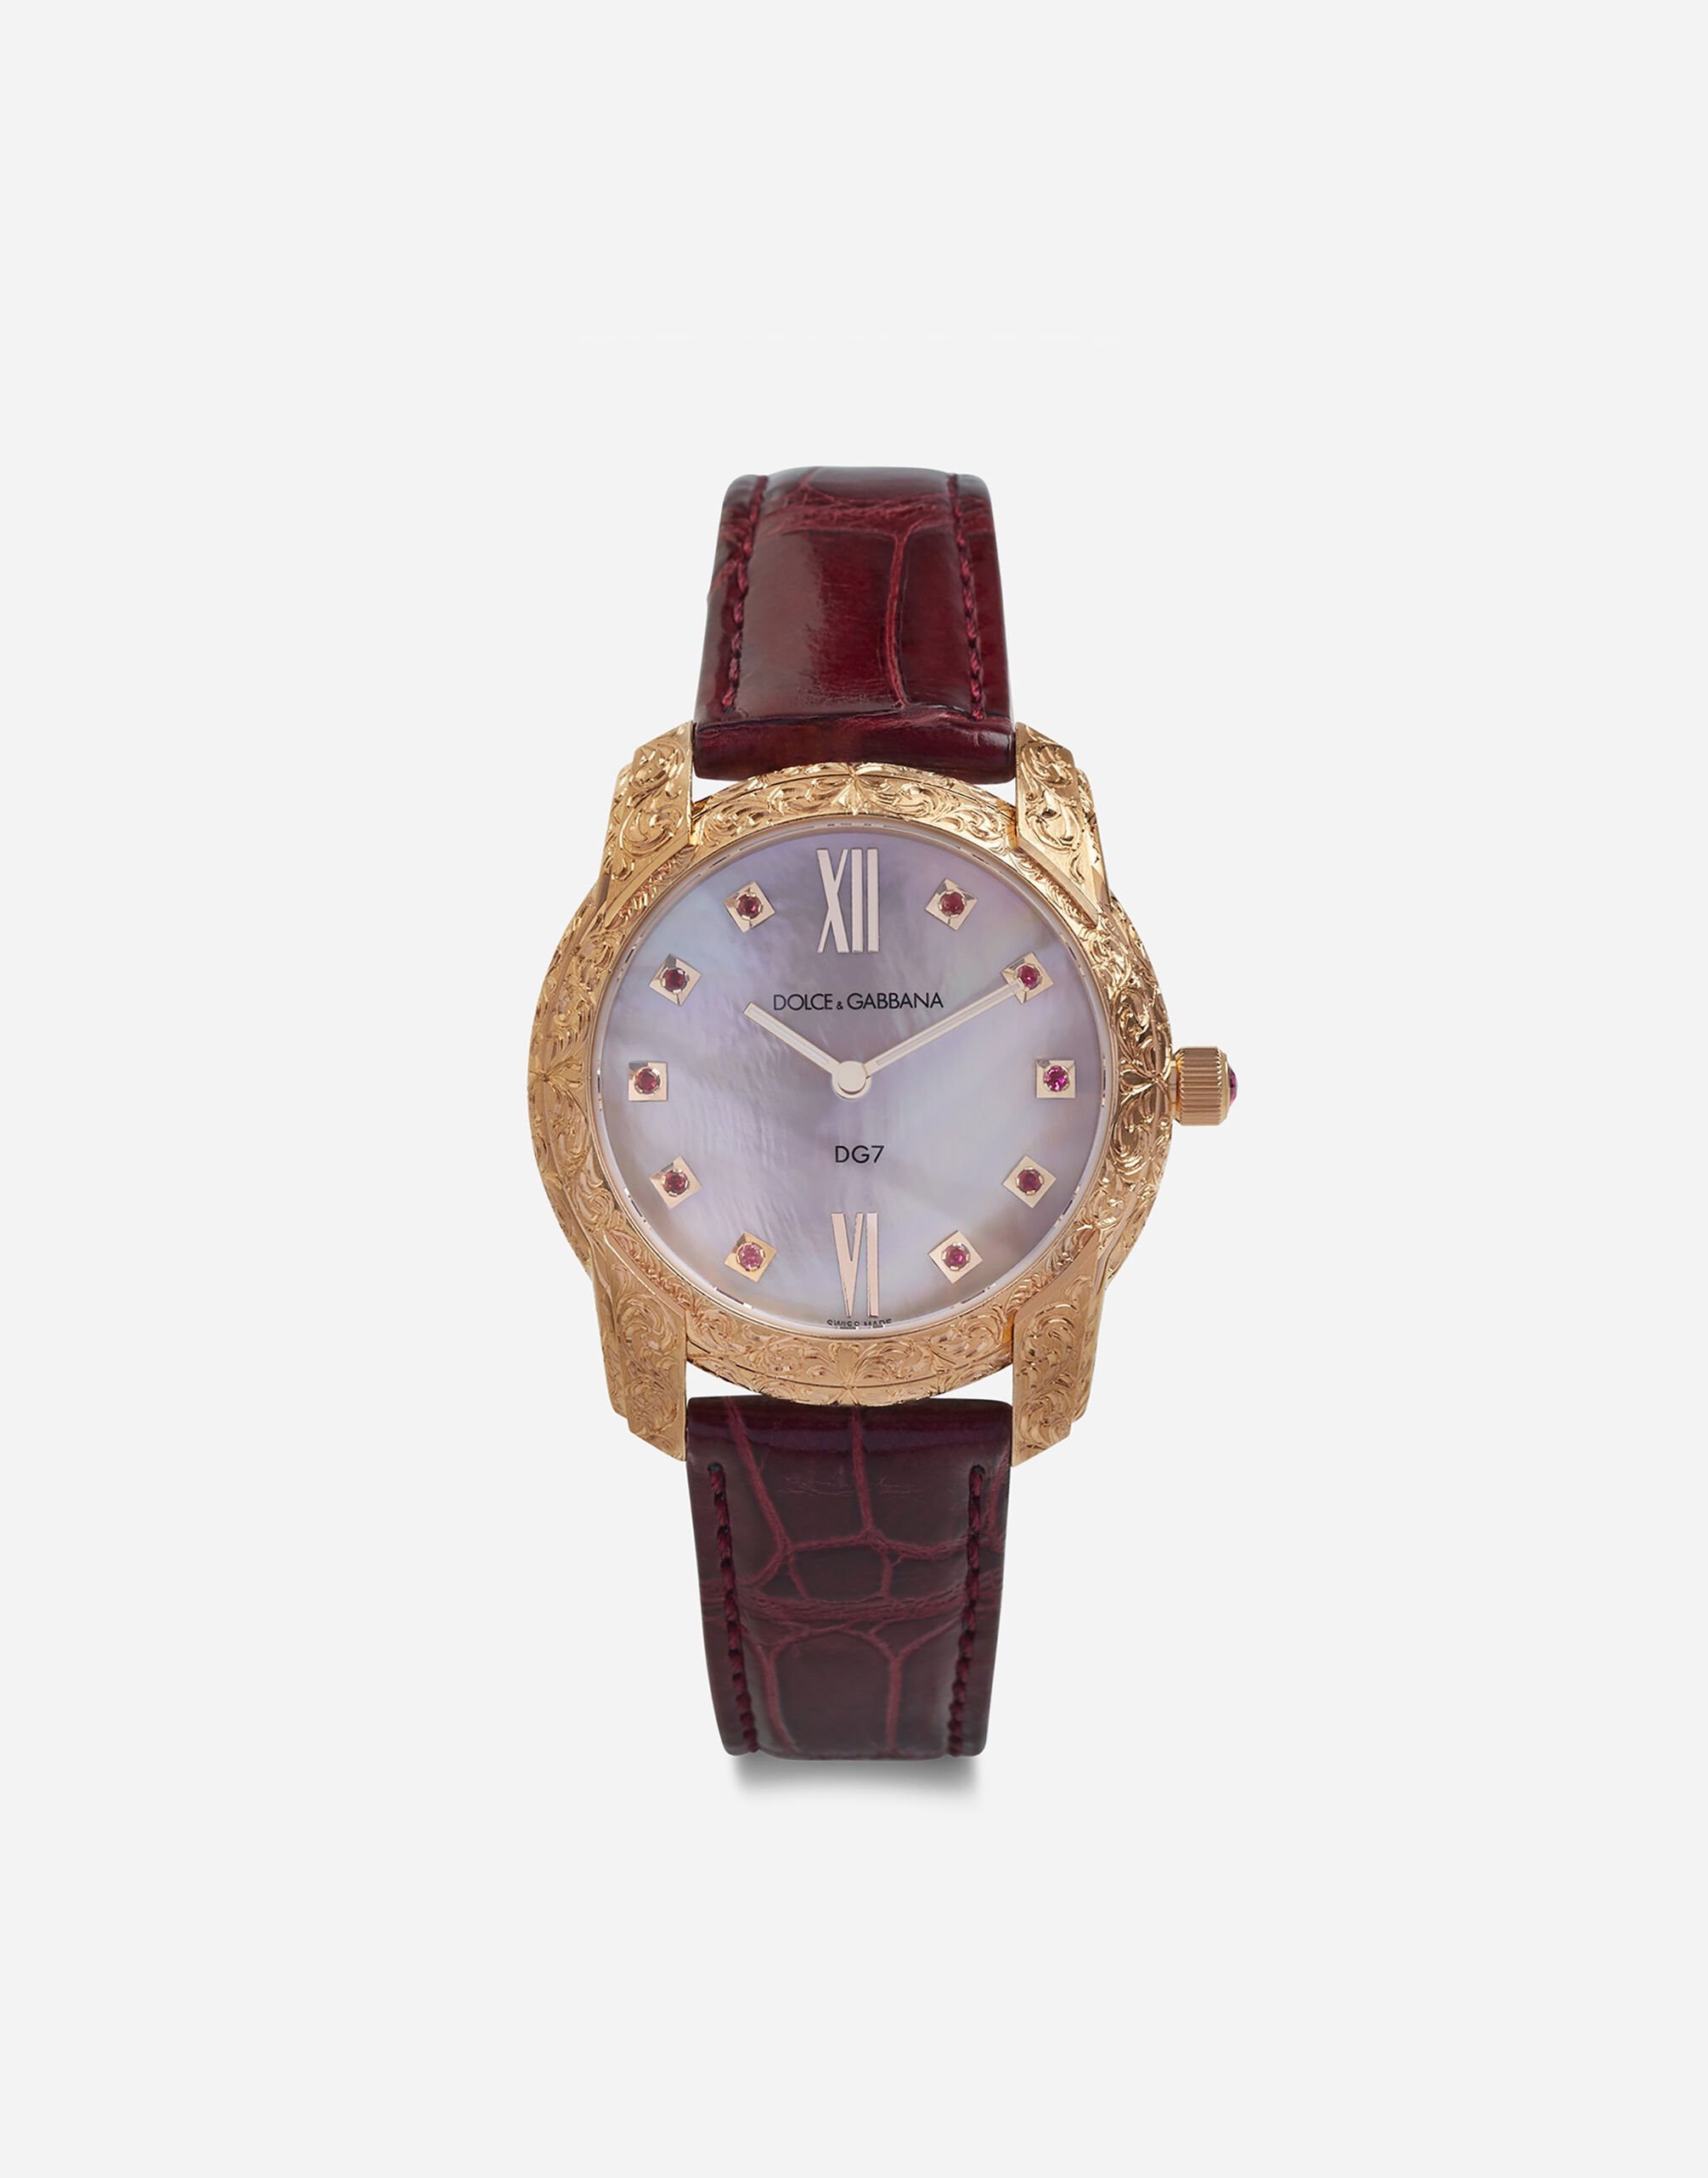 Dolce & Gabbana ساعة DG7 غاتوباردو من الذهب الأحمر مرصعة بعرق اللؤلؤ الوردي والياقوت الأحمر ذهبي WWLB1GWMIX1